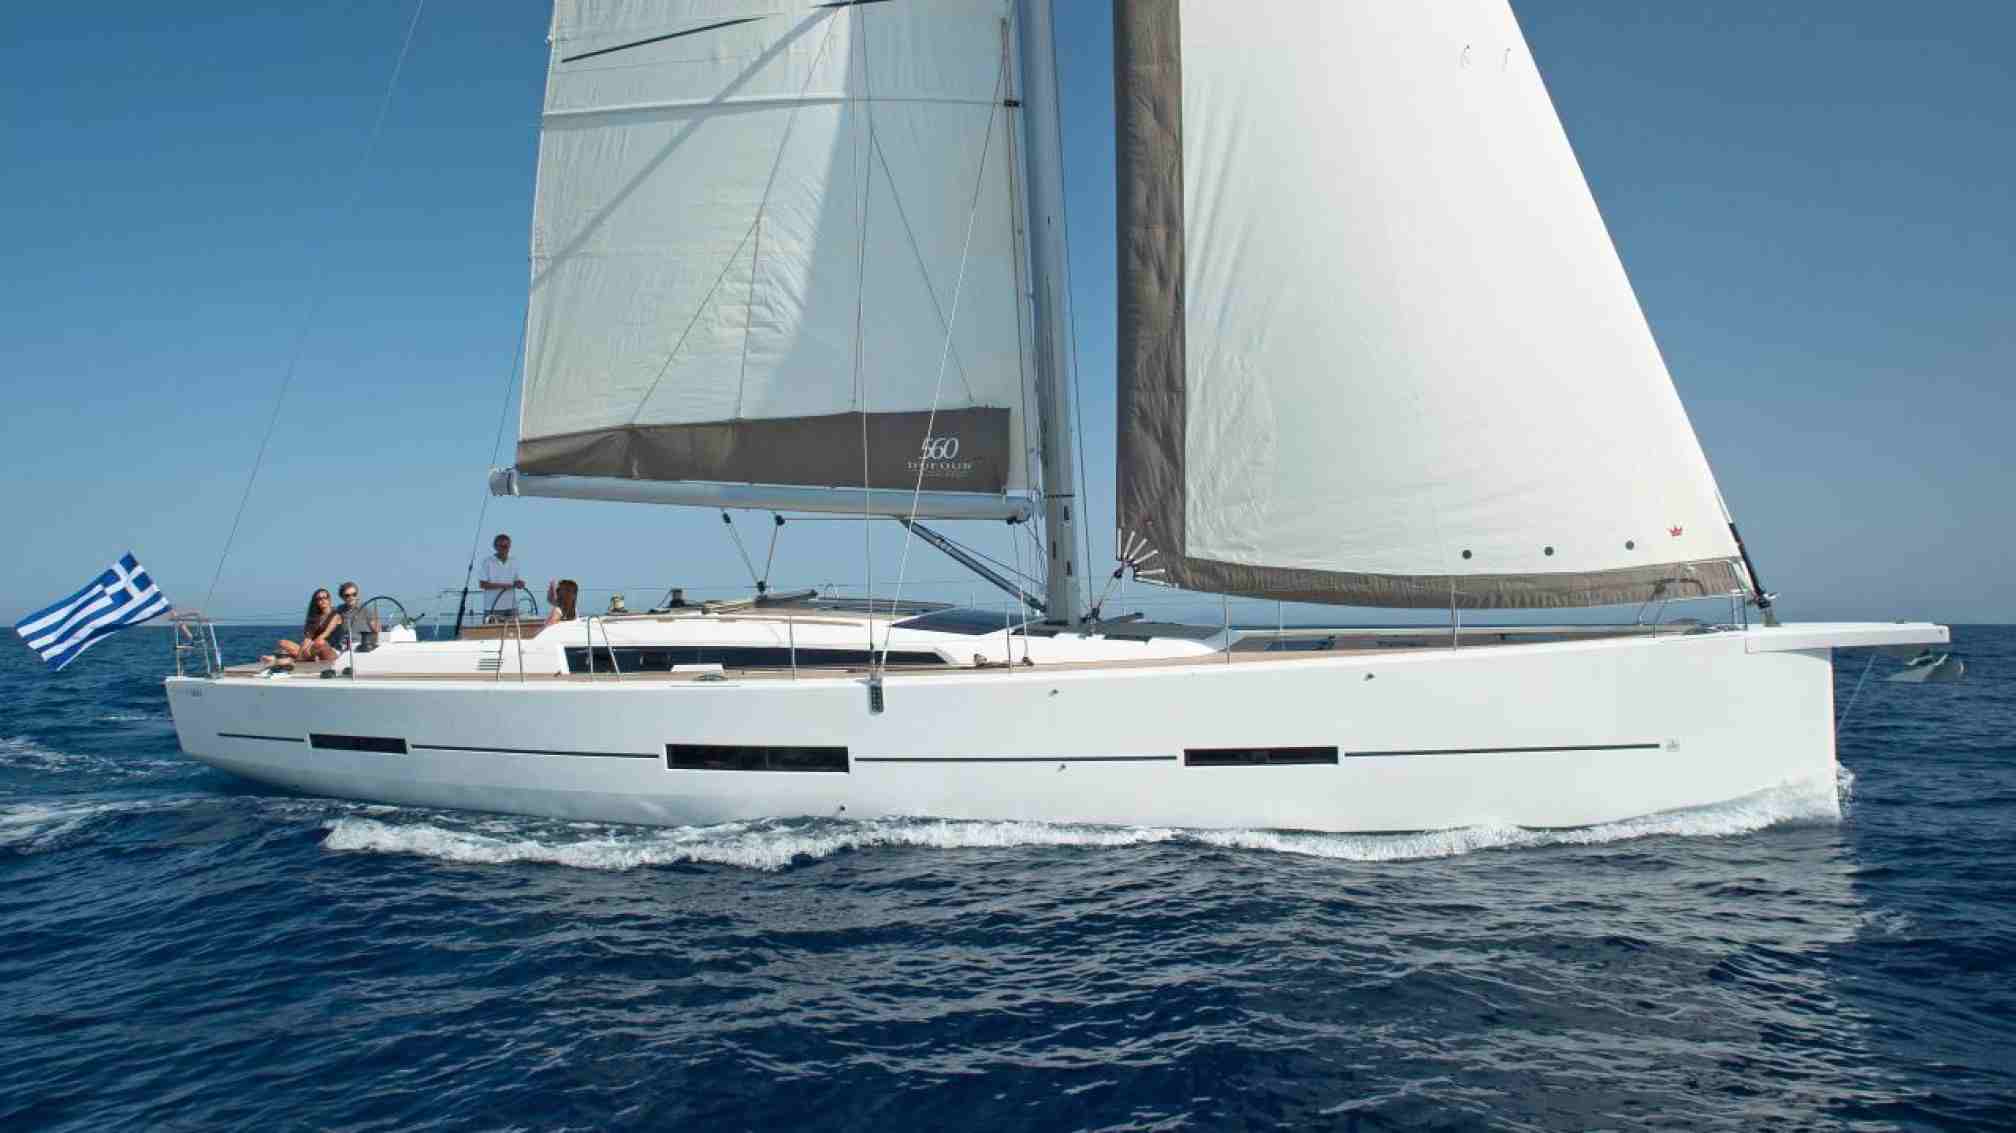 Dufour 560 GL charter sailboat, sailing